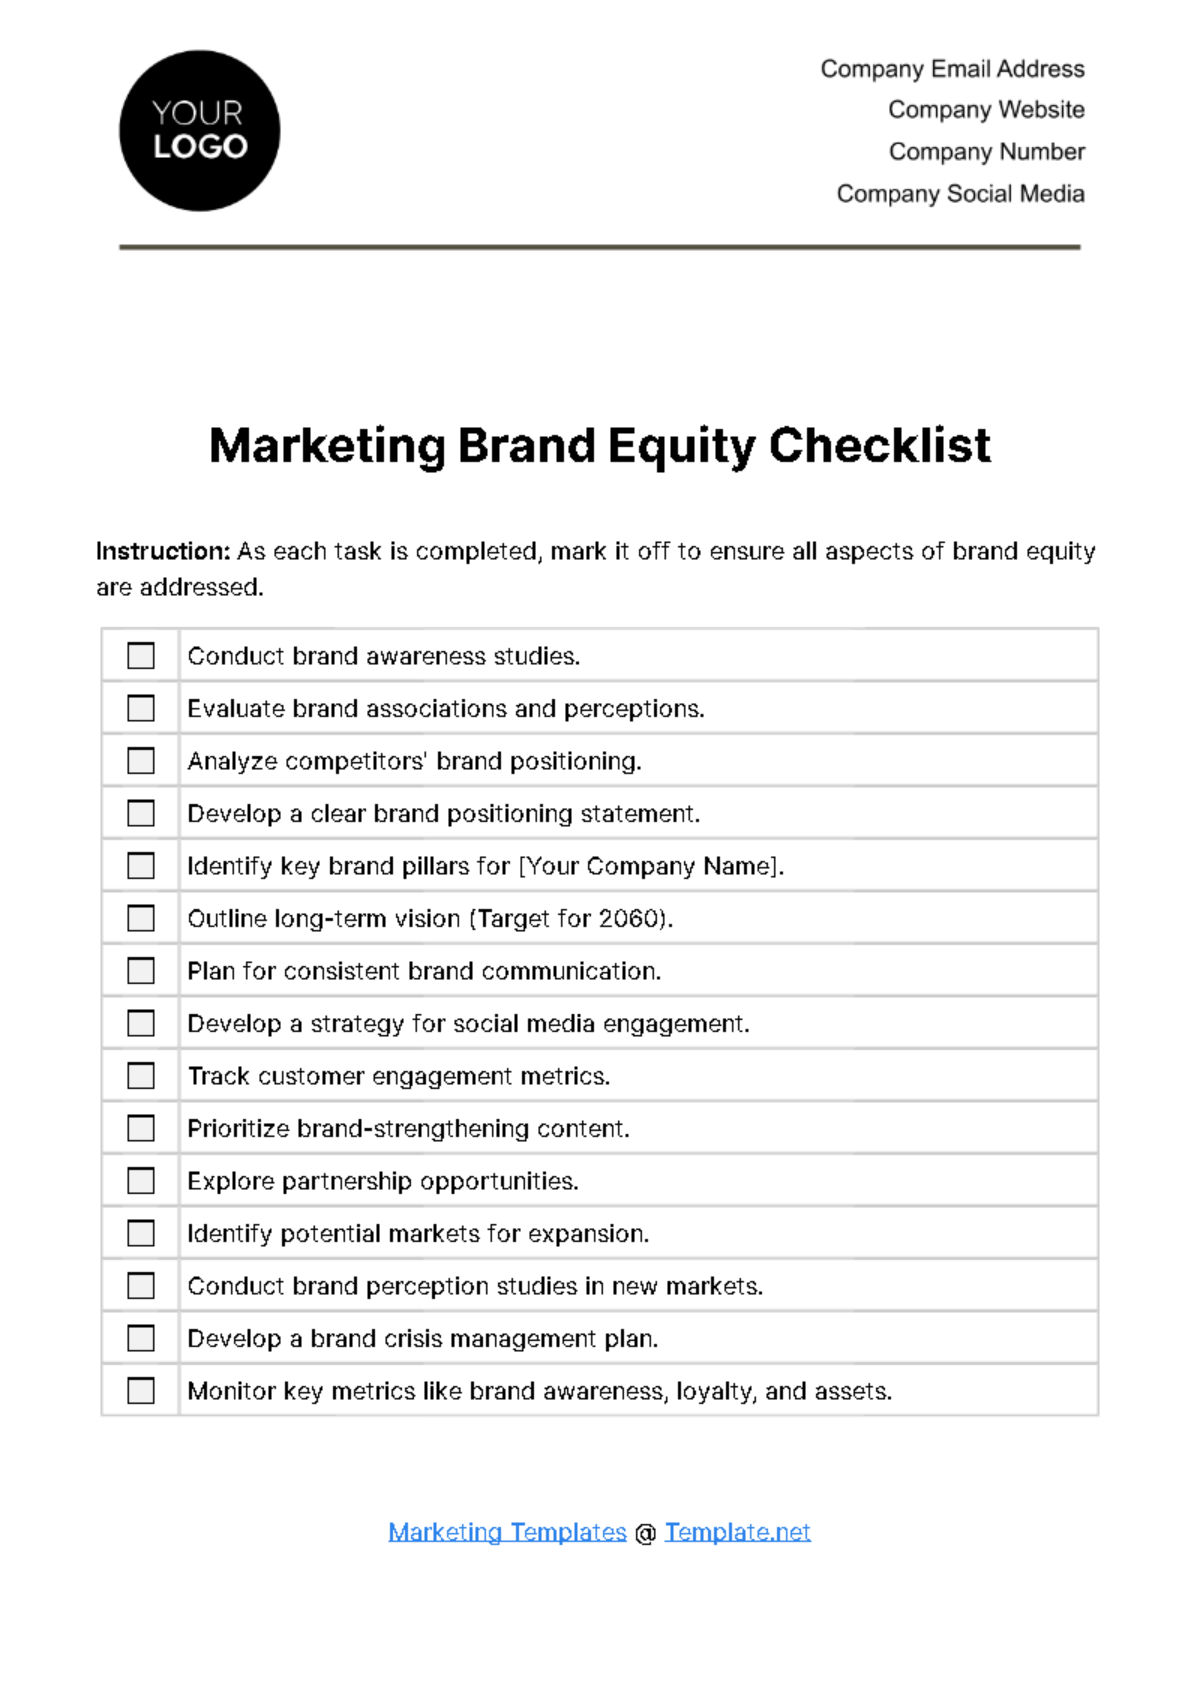 Marketing Brand Equity Checklist Template